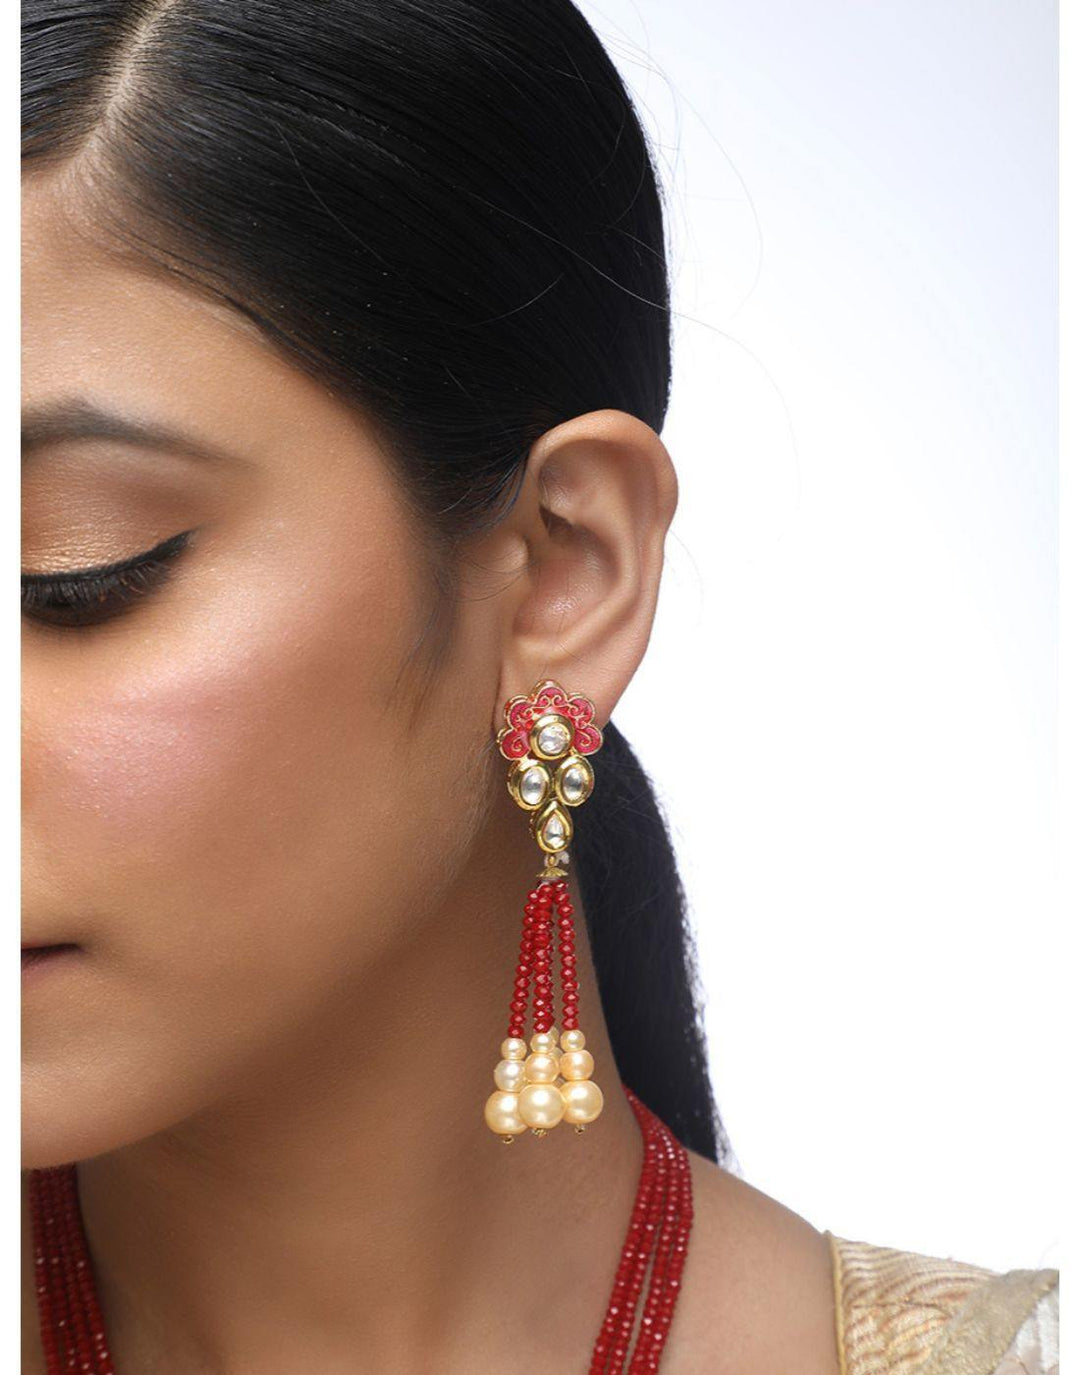 Red Pearl & Kundan Desinger Pendant Neckpiece wWith Earrings-Accessories-Glamourental